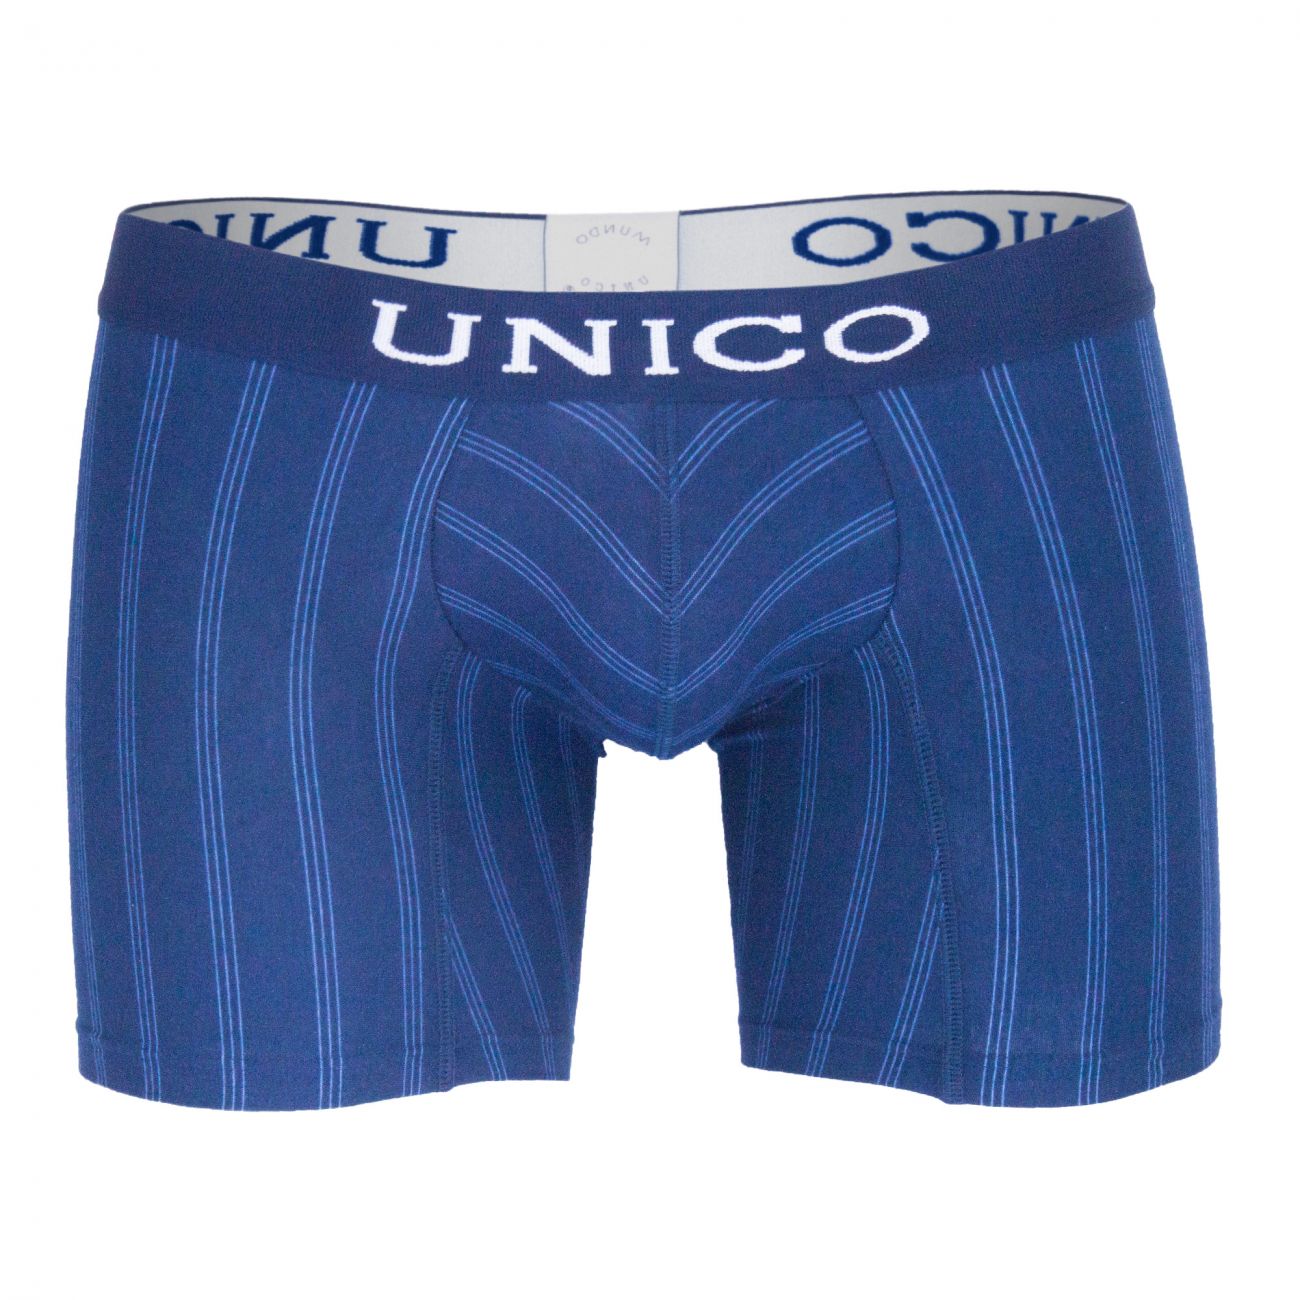 Unico 1400090382 Boxer Briefs Paralelo Blue